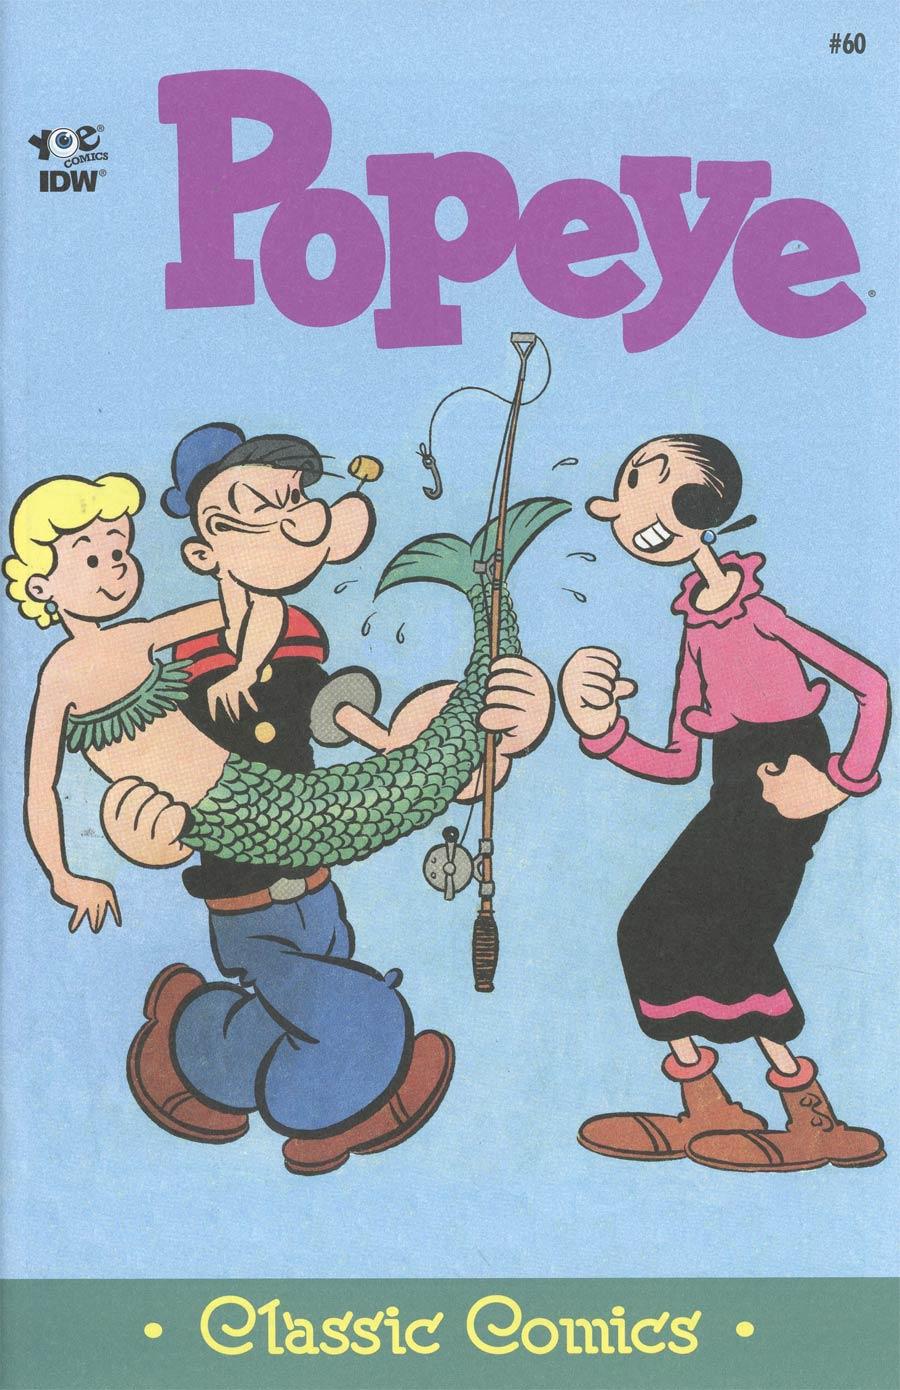 Classic Popeye Vol. 1 #60